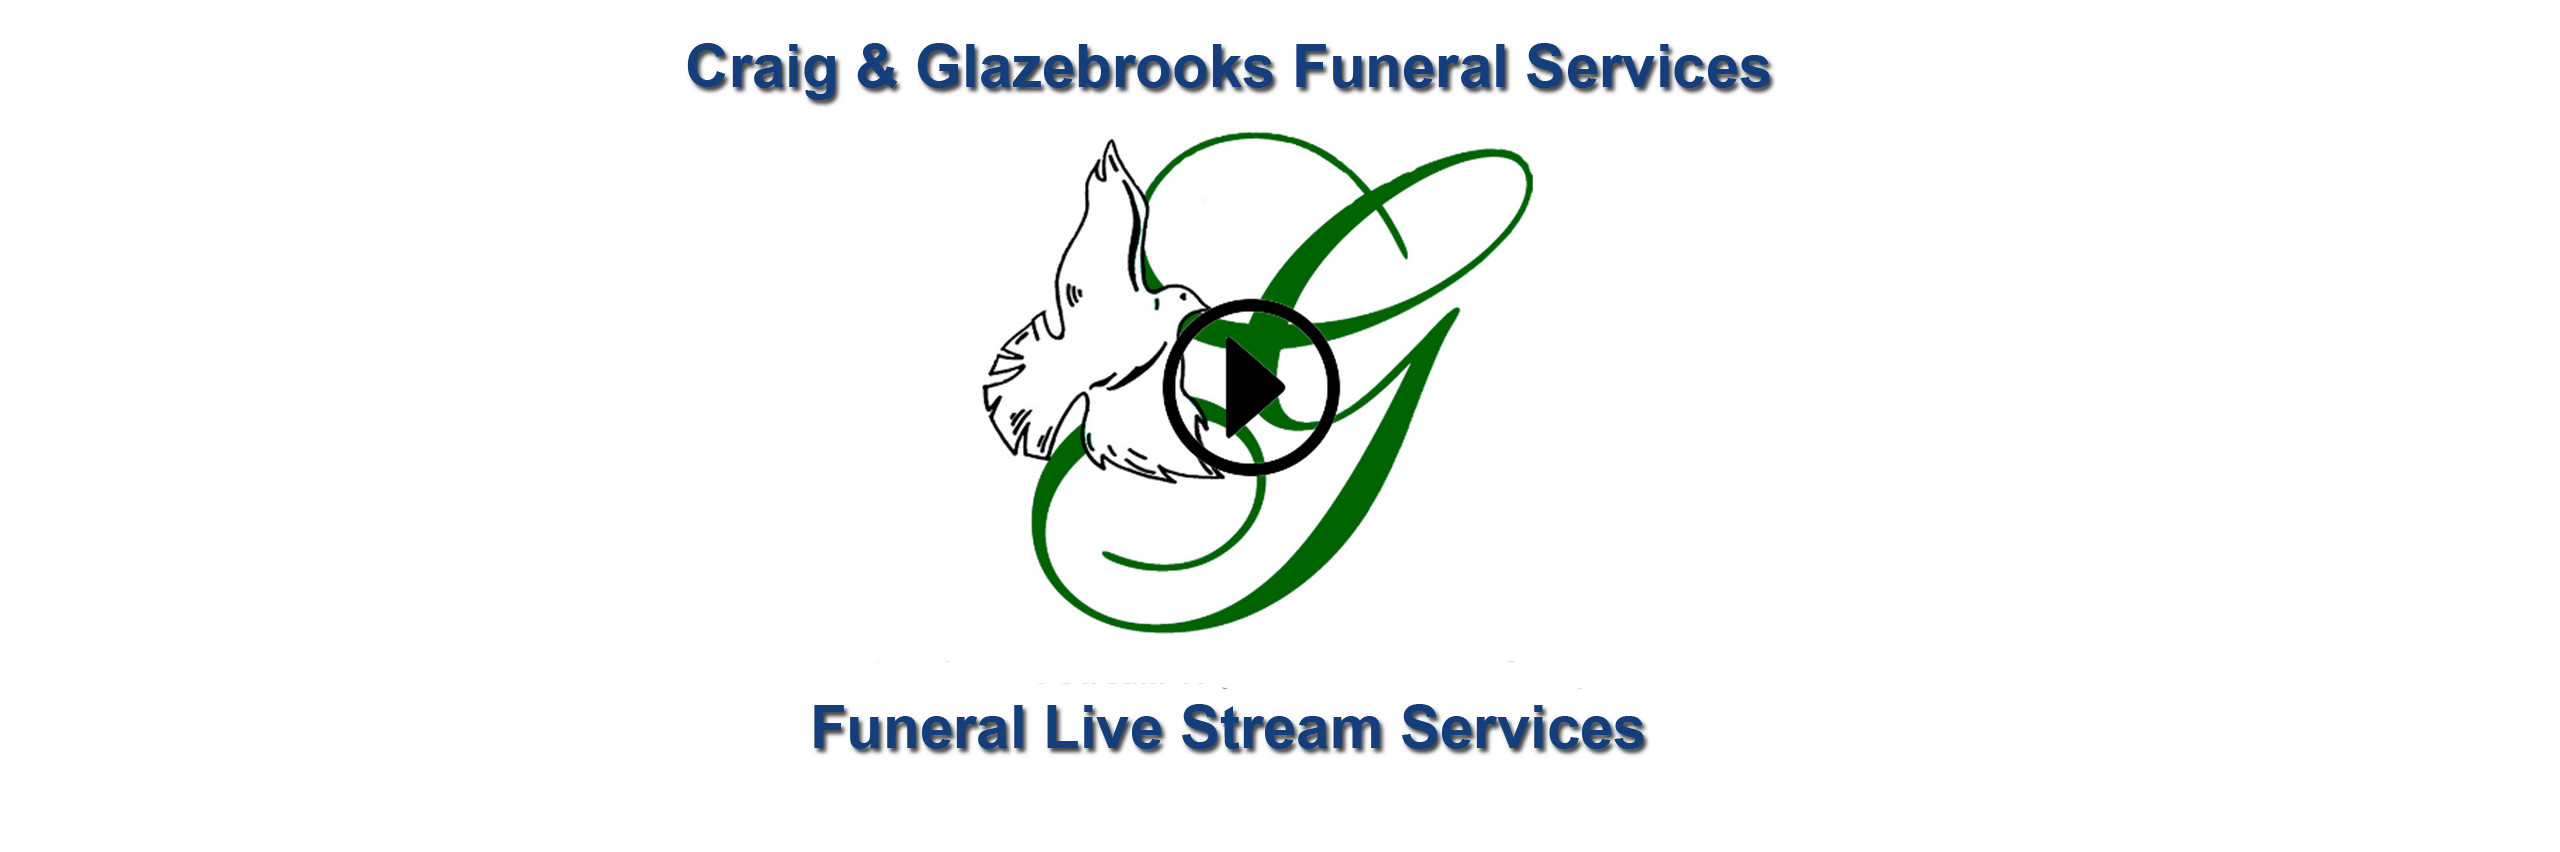 Craig & Glazebrooks Funeral Services